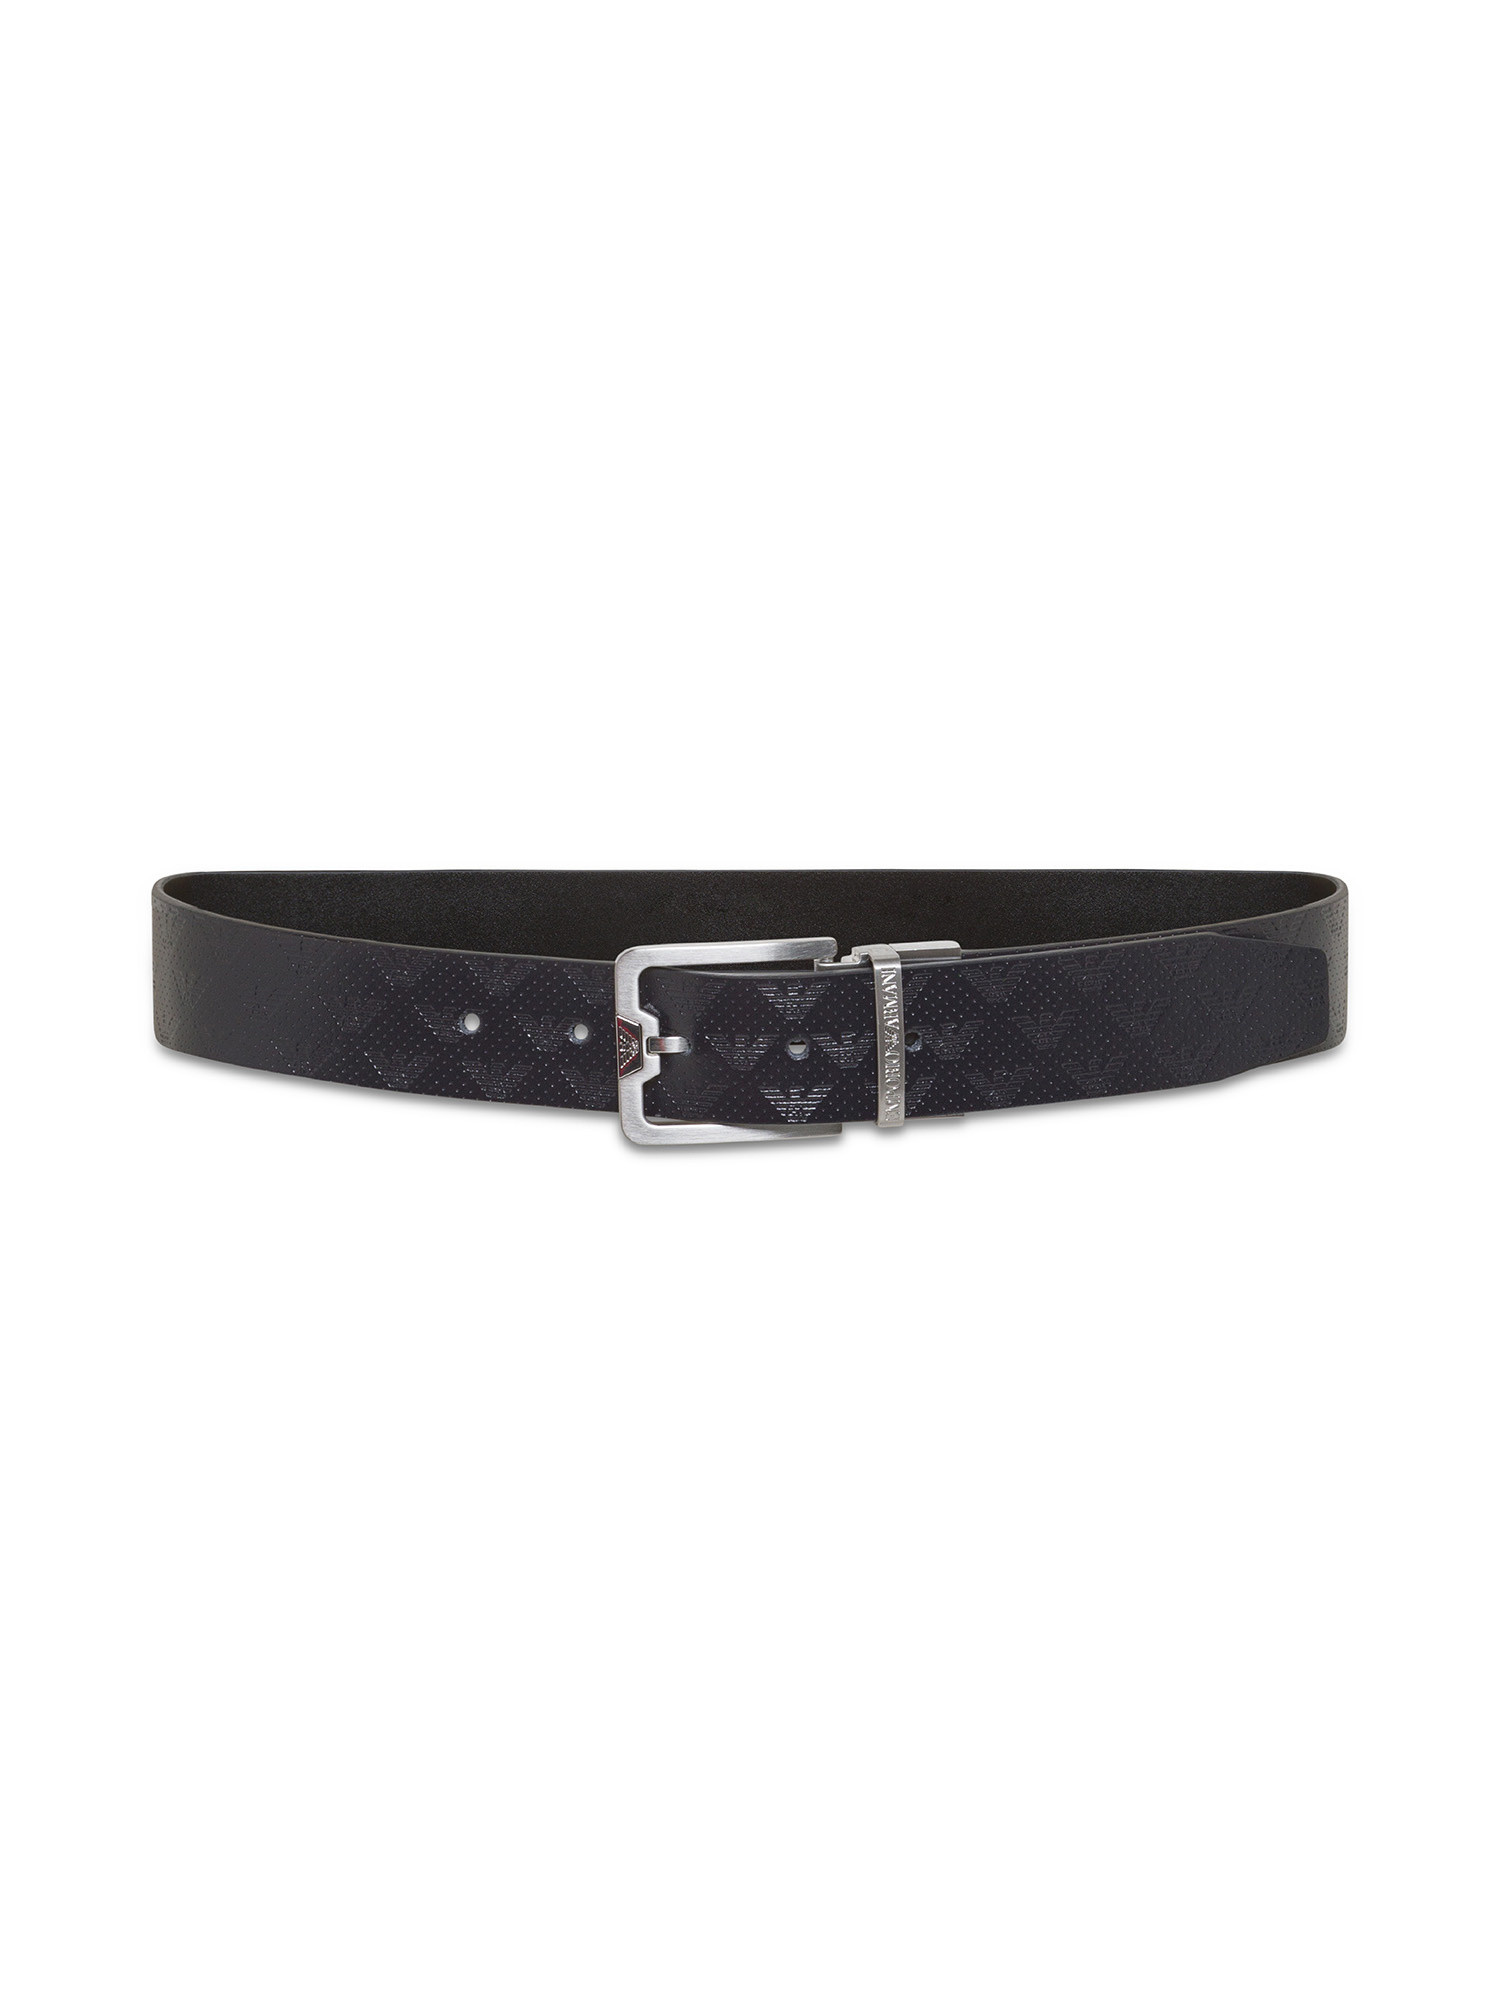 Emporio Armani - Leather belt with logo, Black, large image number 1